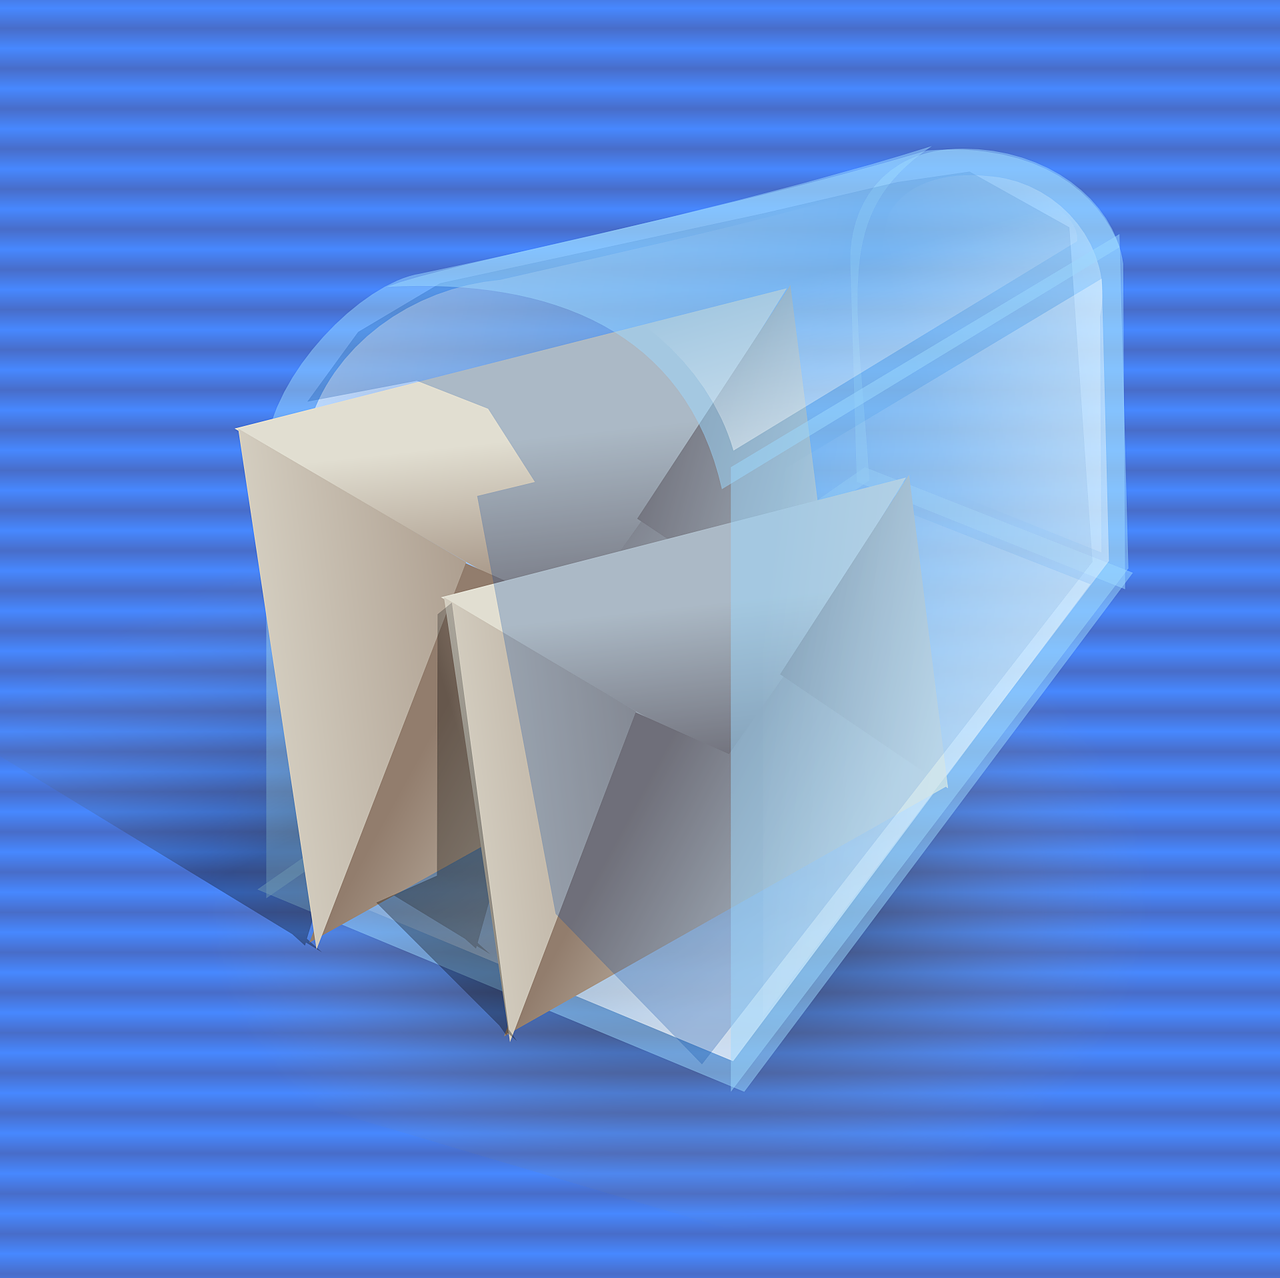 mailbox (c) Pixabay